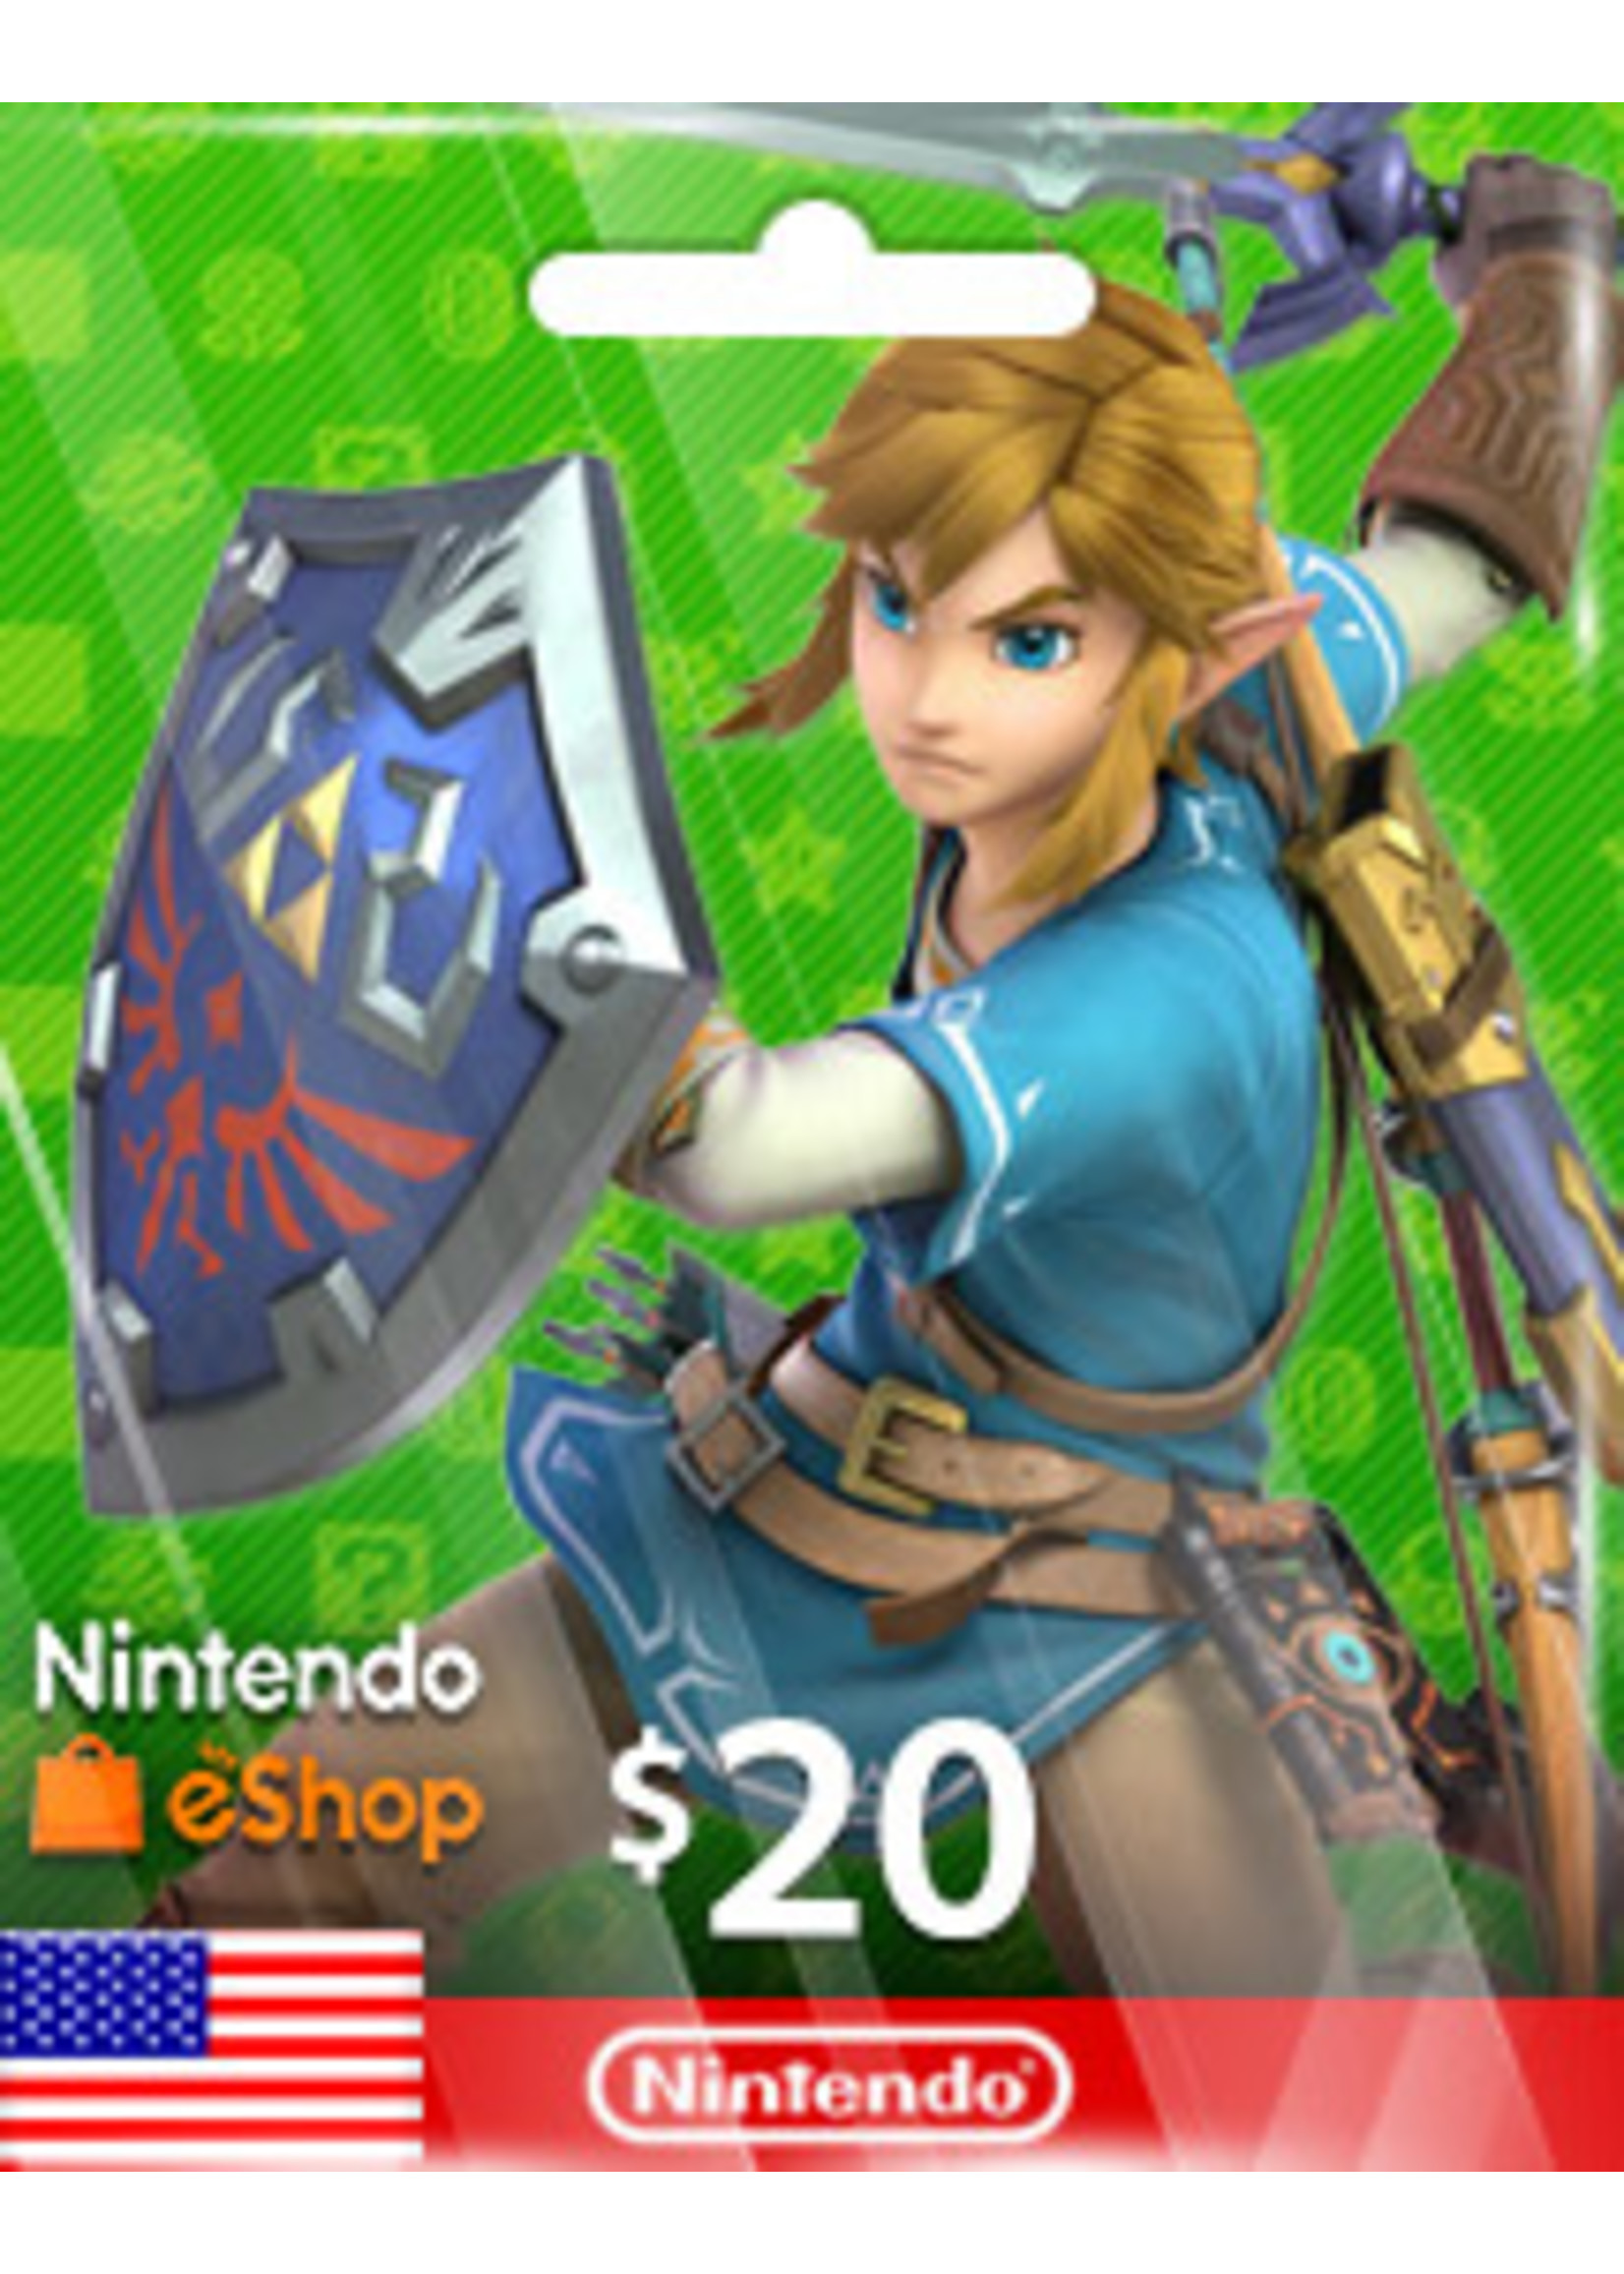 Nintendo Nintendo eShop $20